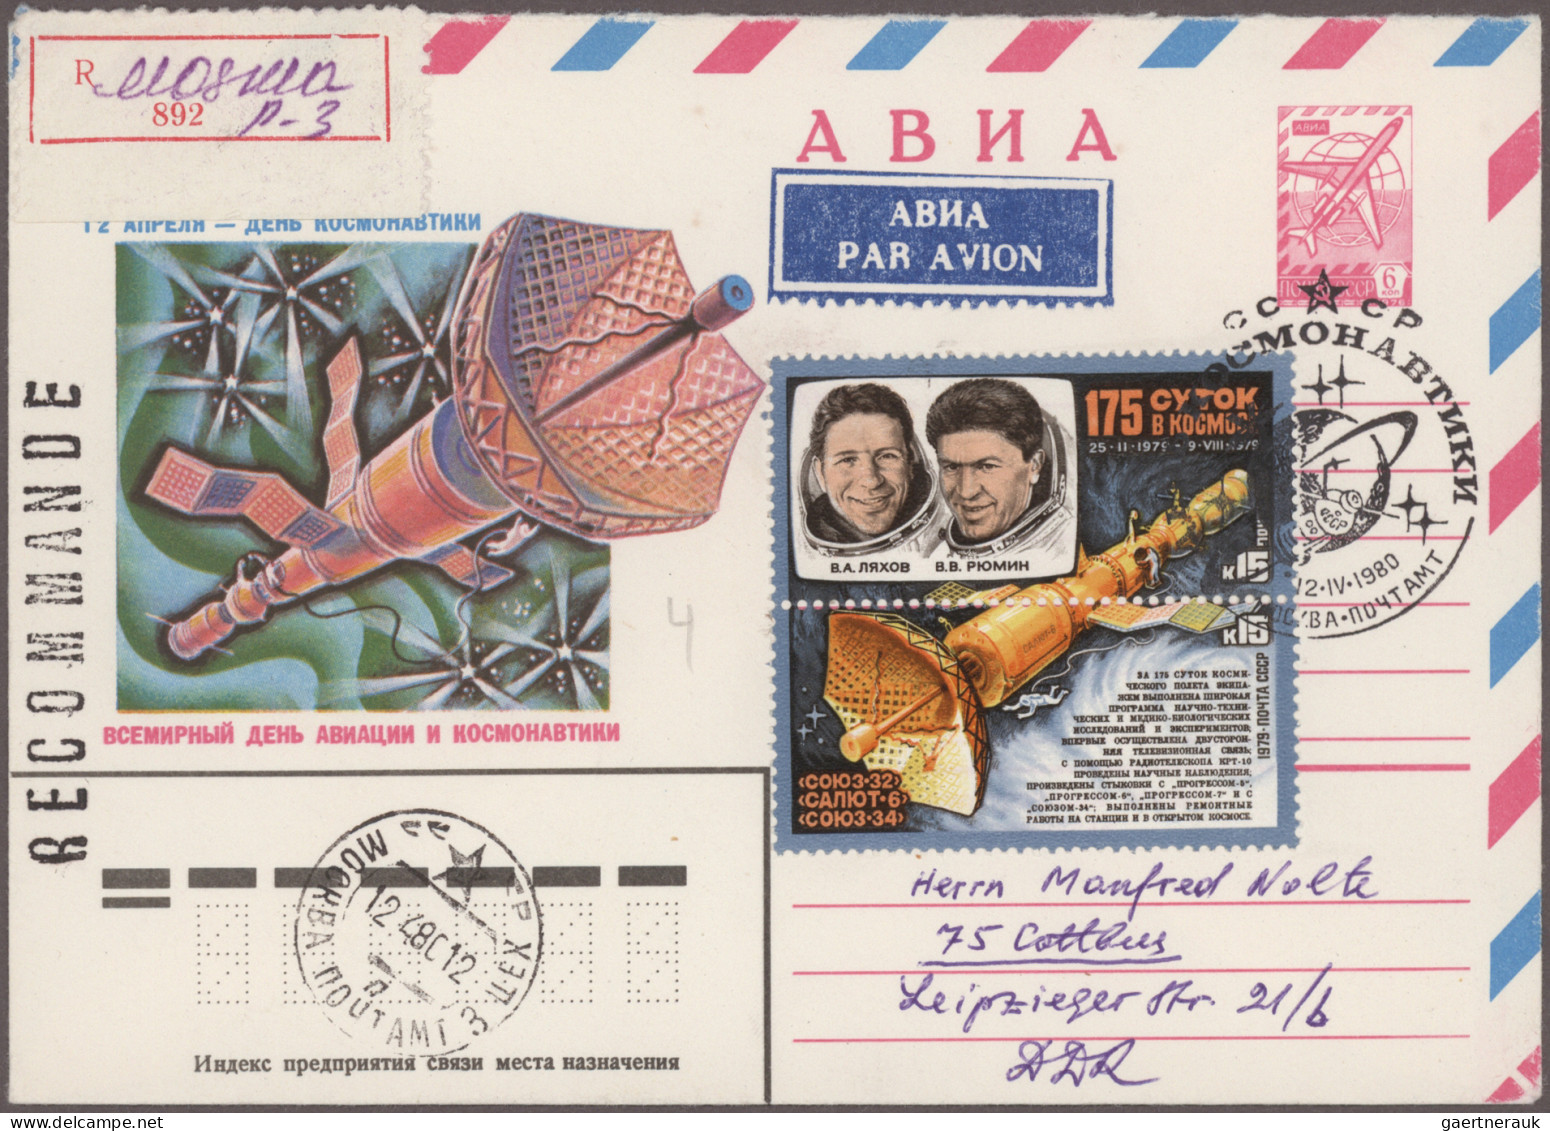 Sowjet Union - Postal Stationery: 1960/1990 (ca.), collection/balance of apprx.